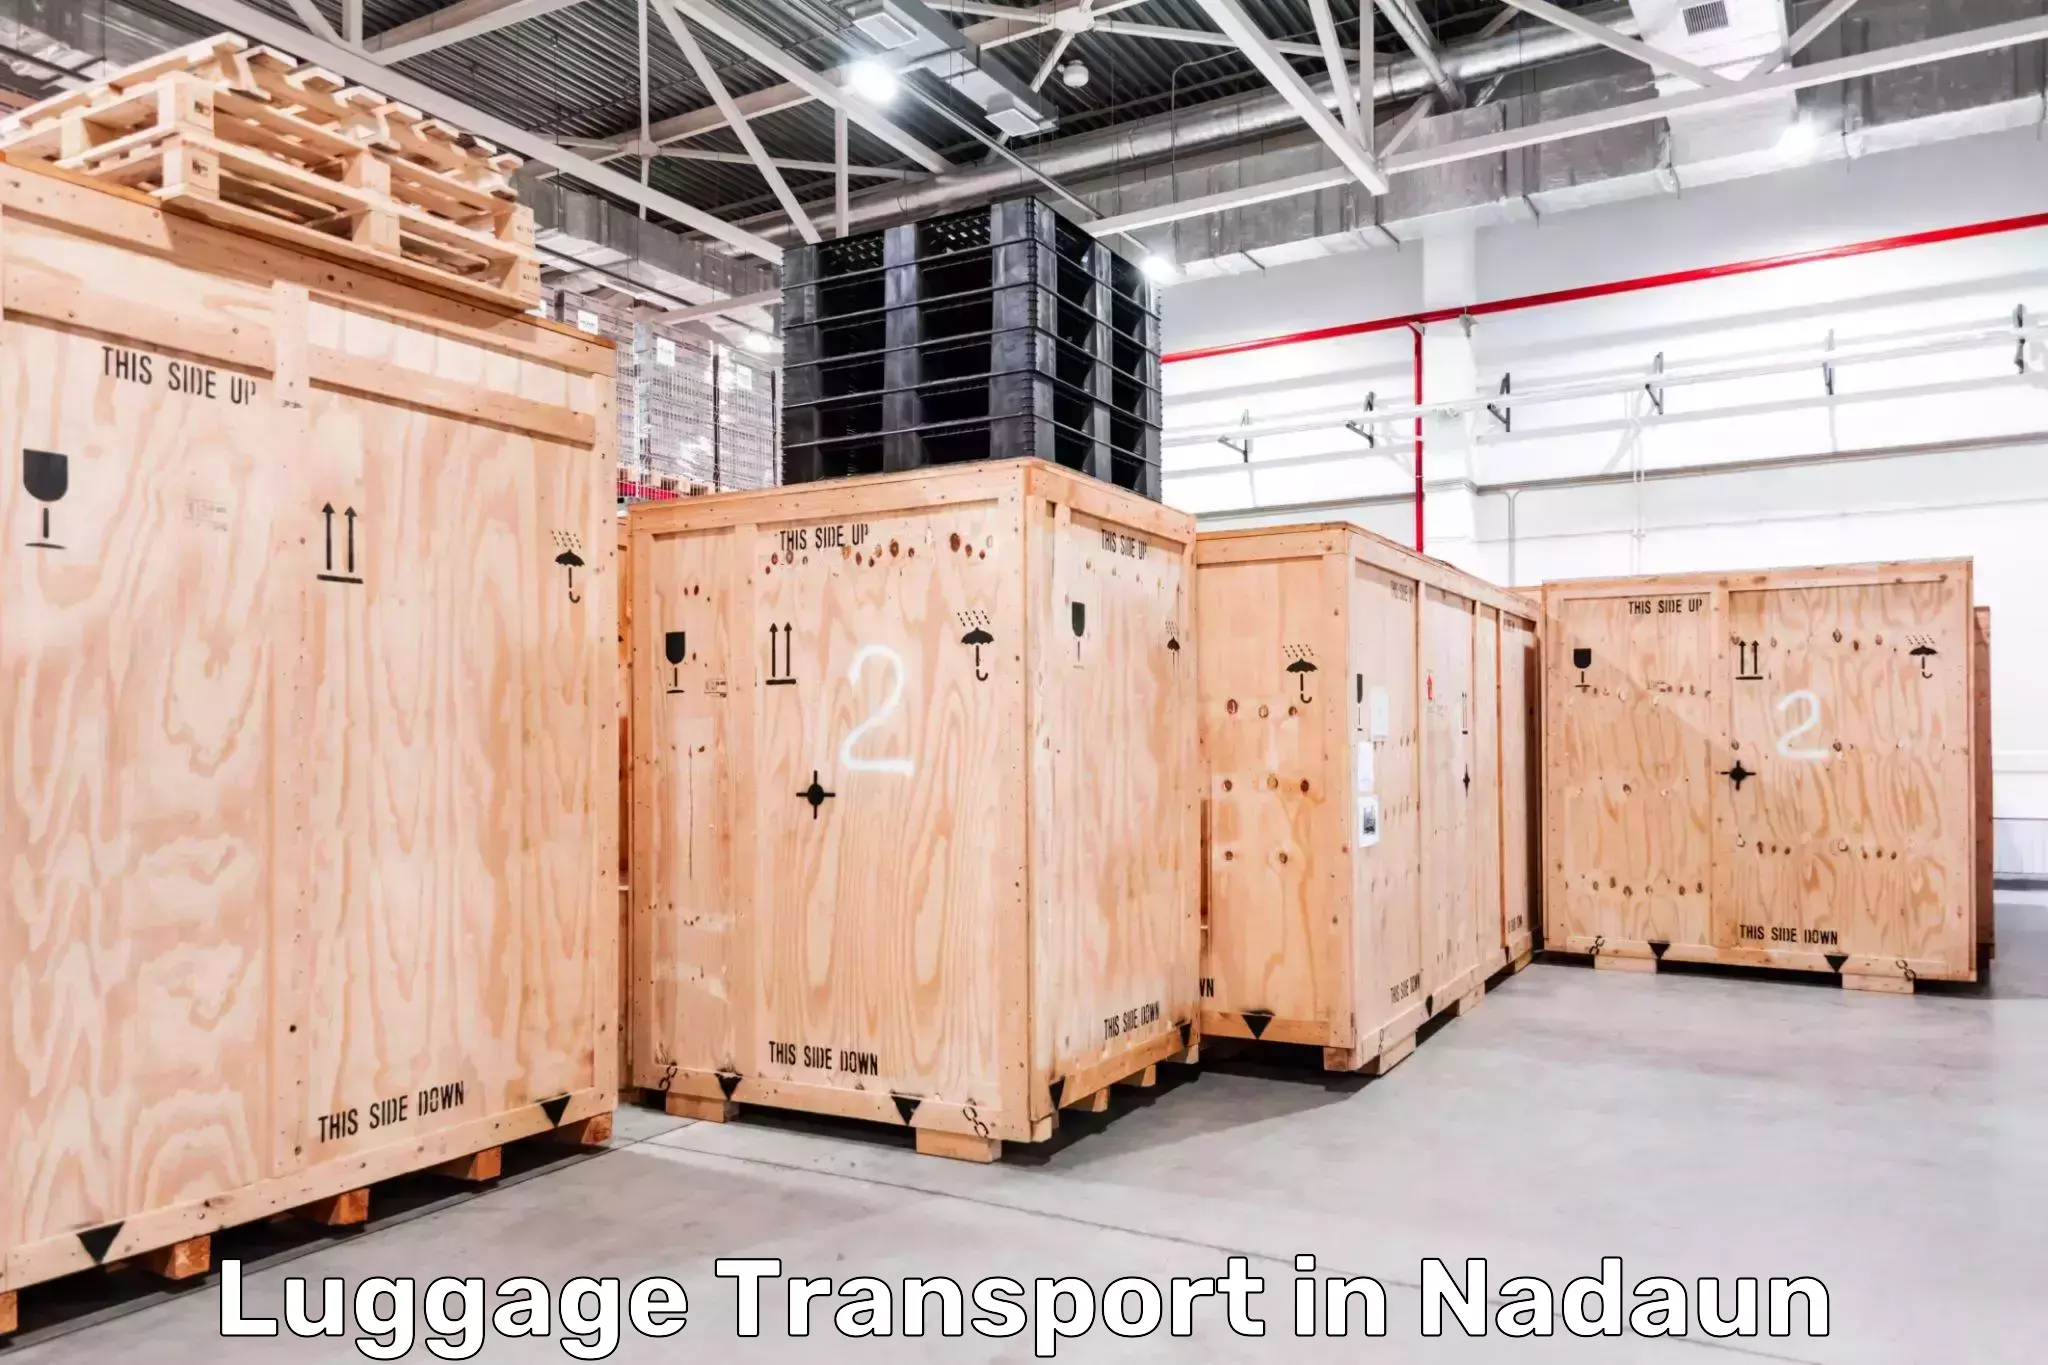 Group luggage shipping in Nadaun